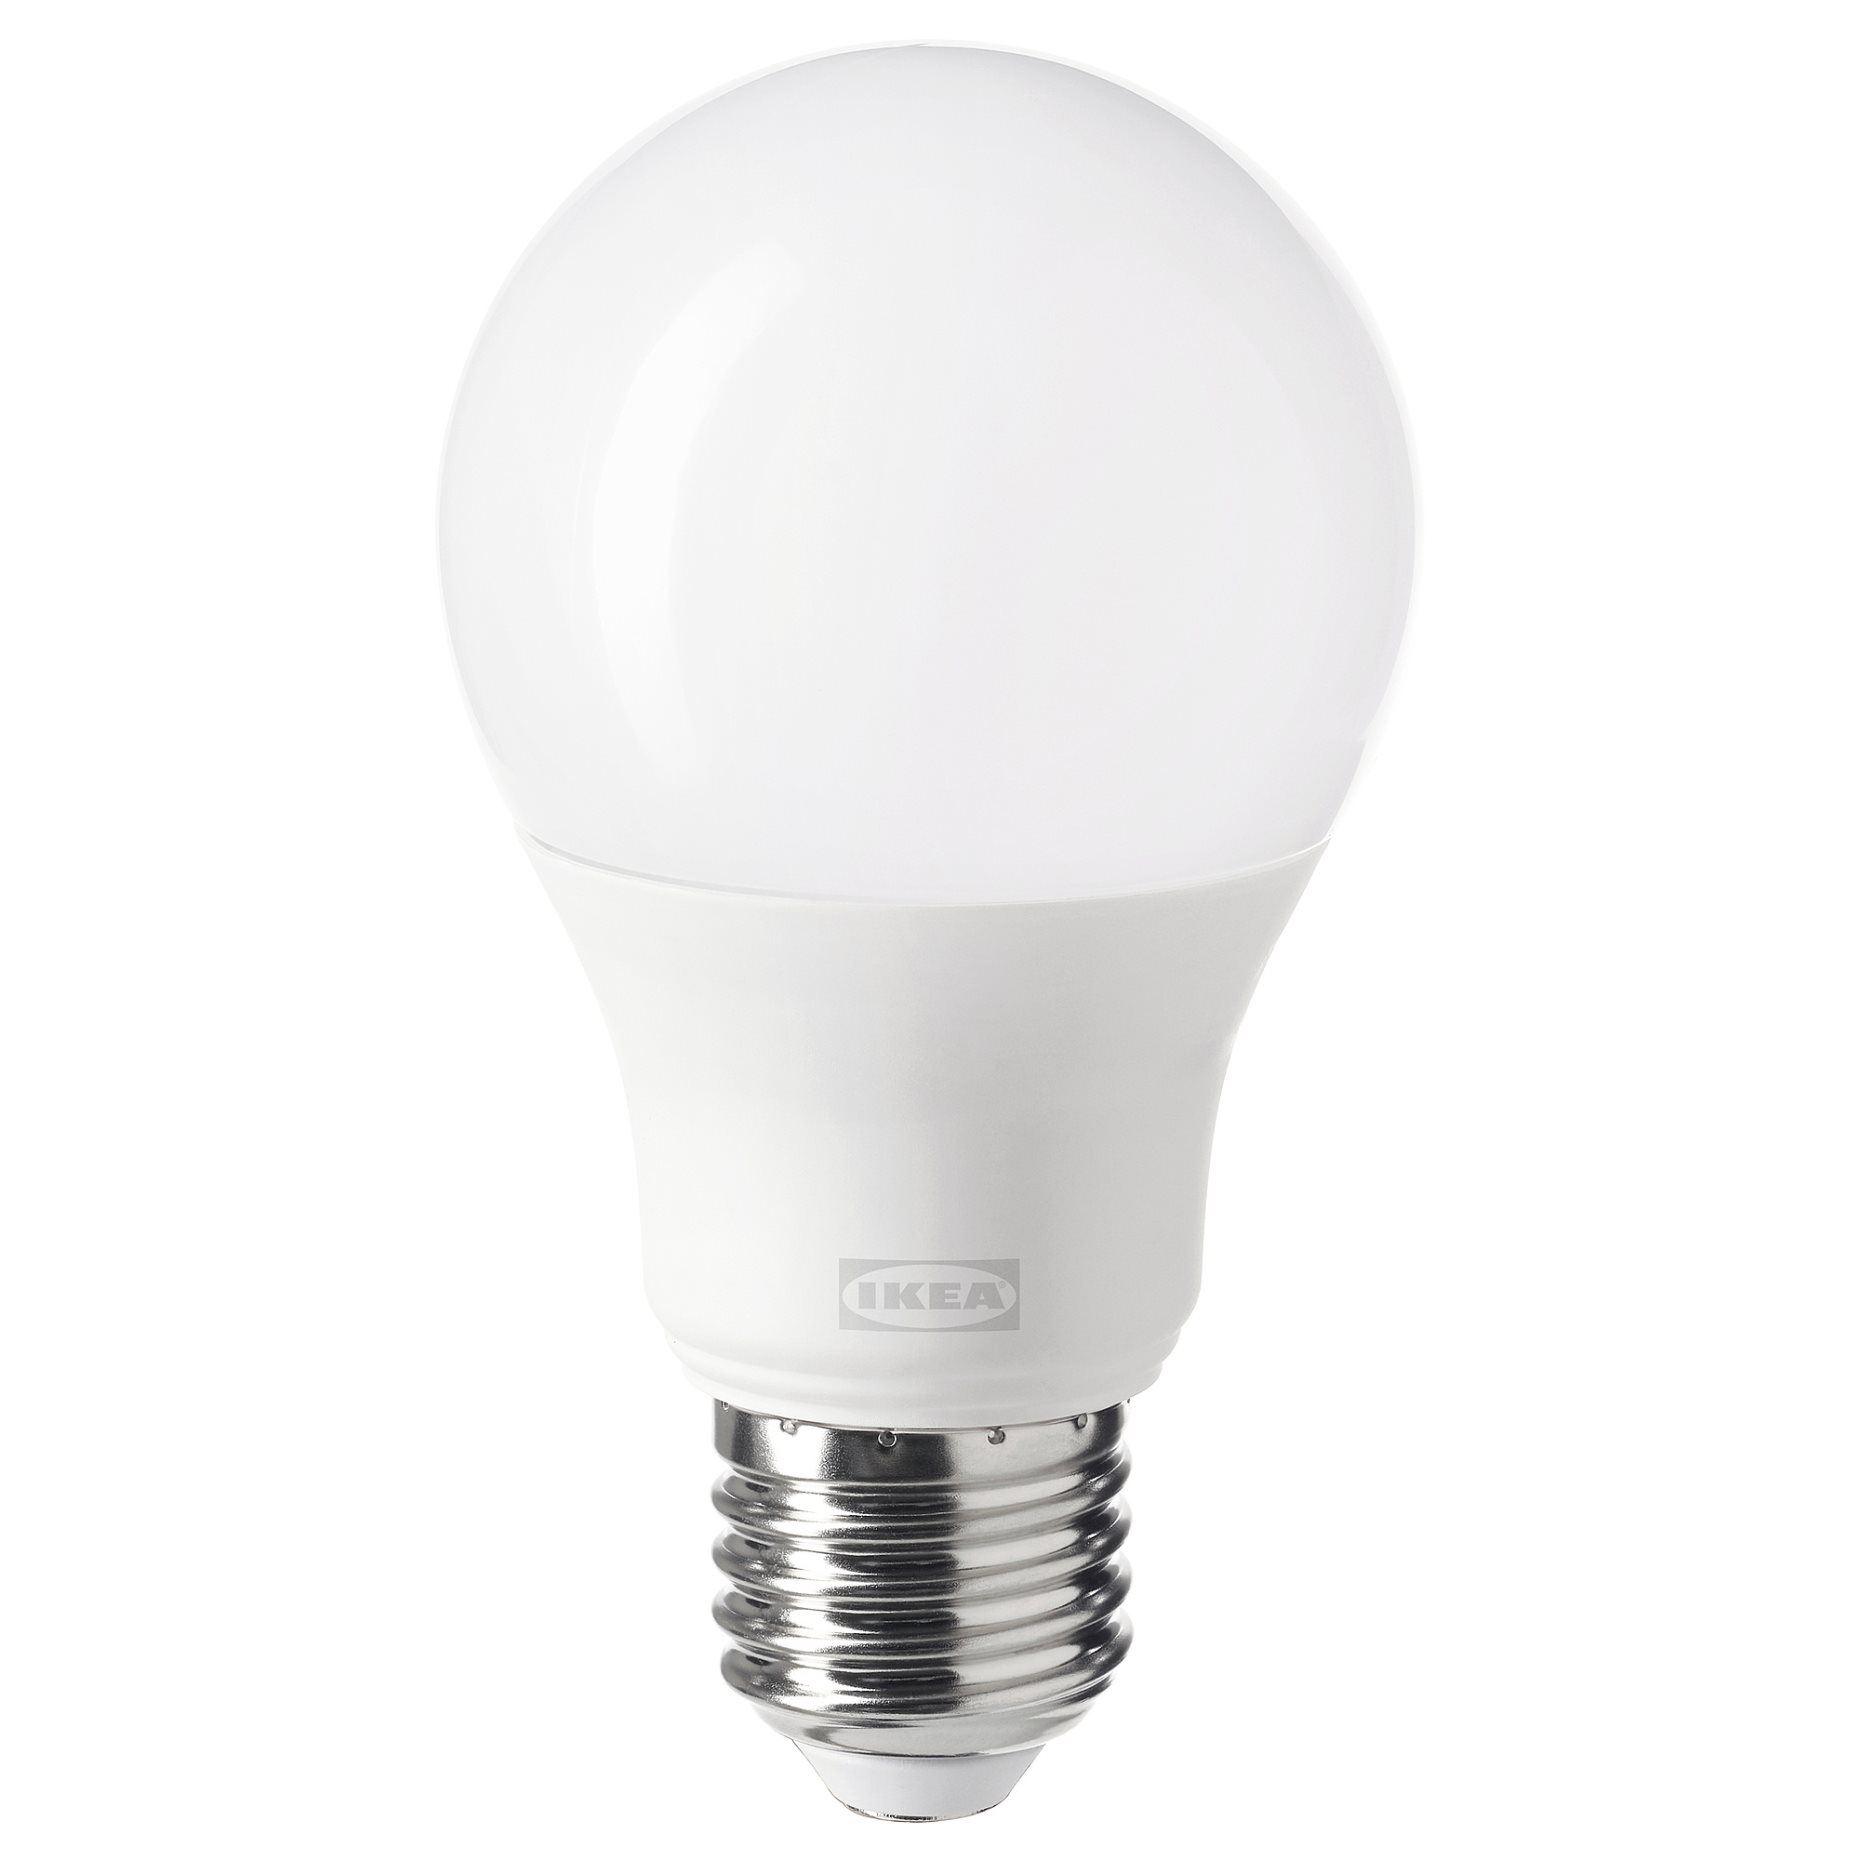 TRÅDFRI, λαμπτήρας LED E27 806 lumen/έξυπνο ασύρματης ρύθμισης/θερμό, 605.414.96